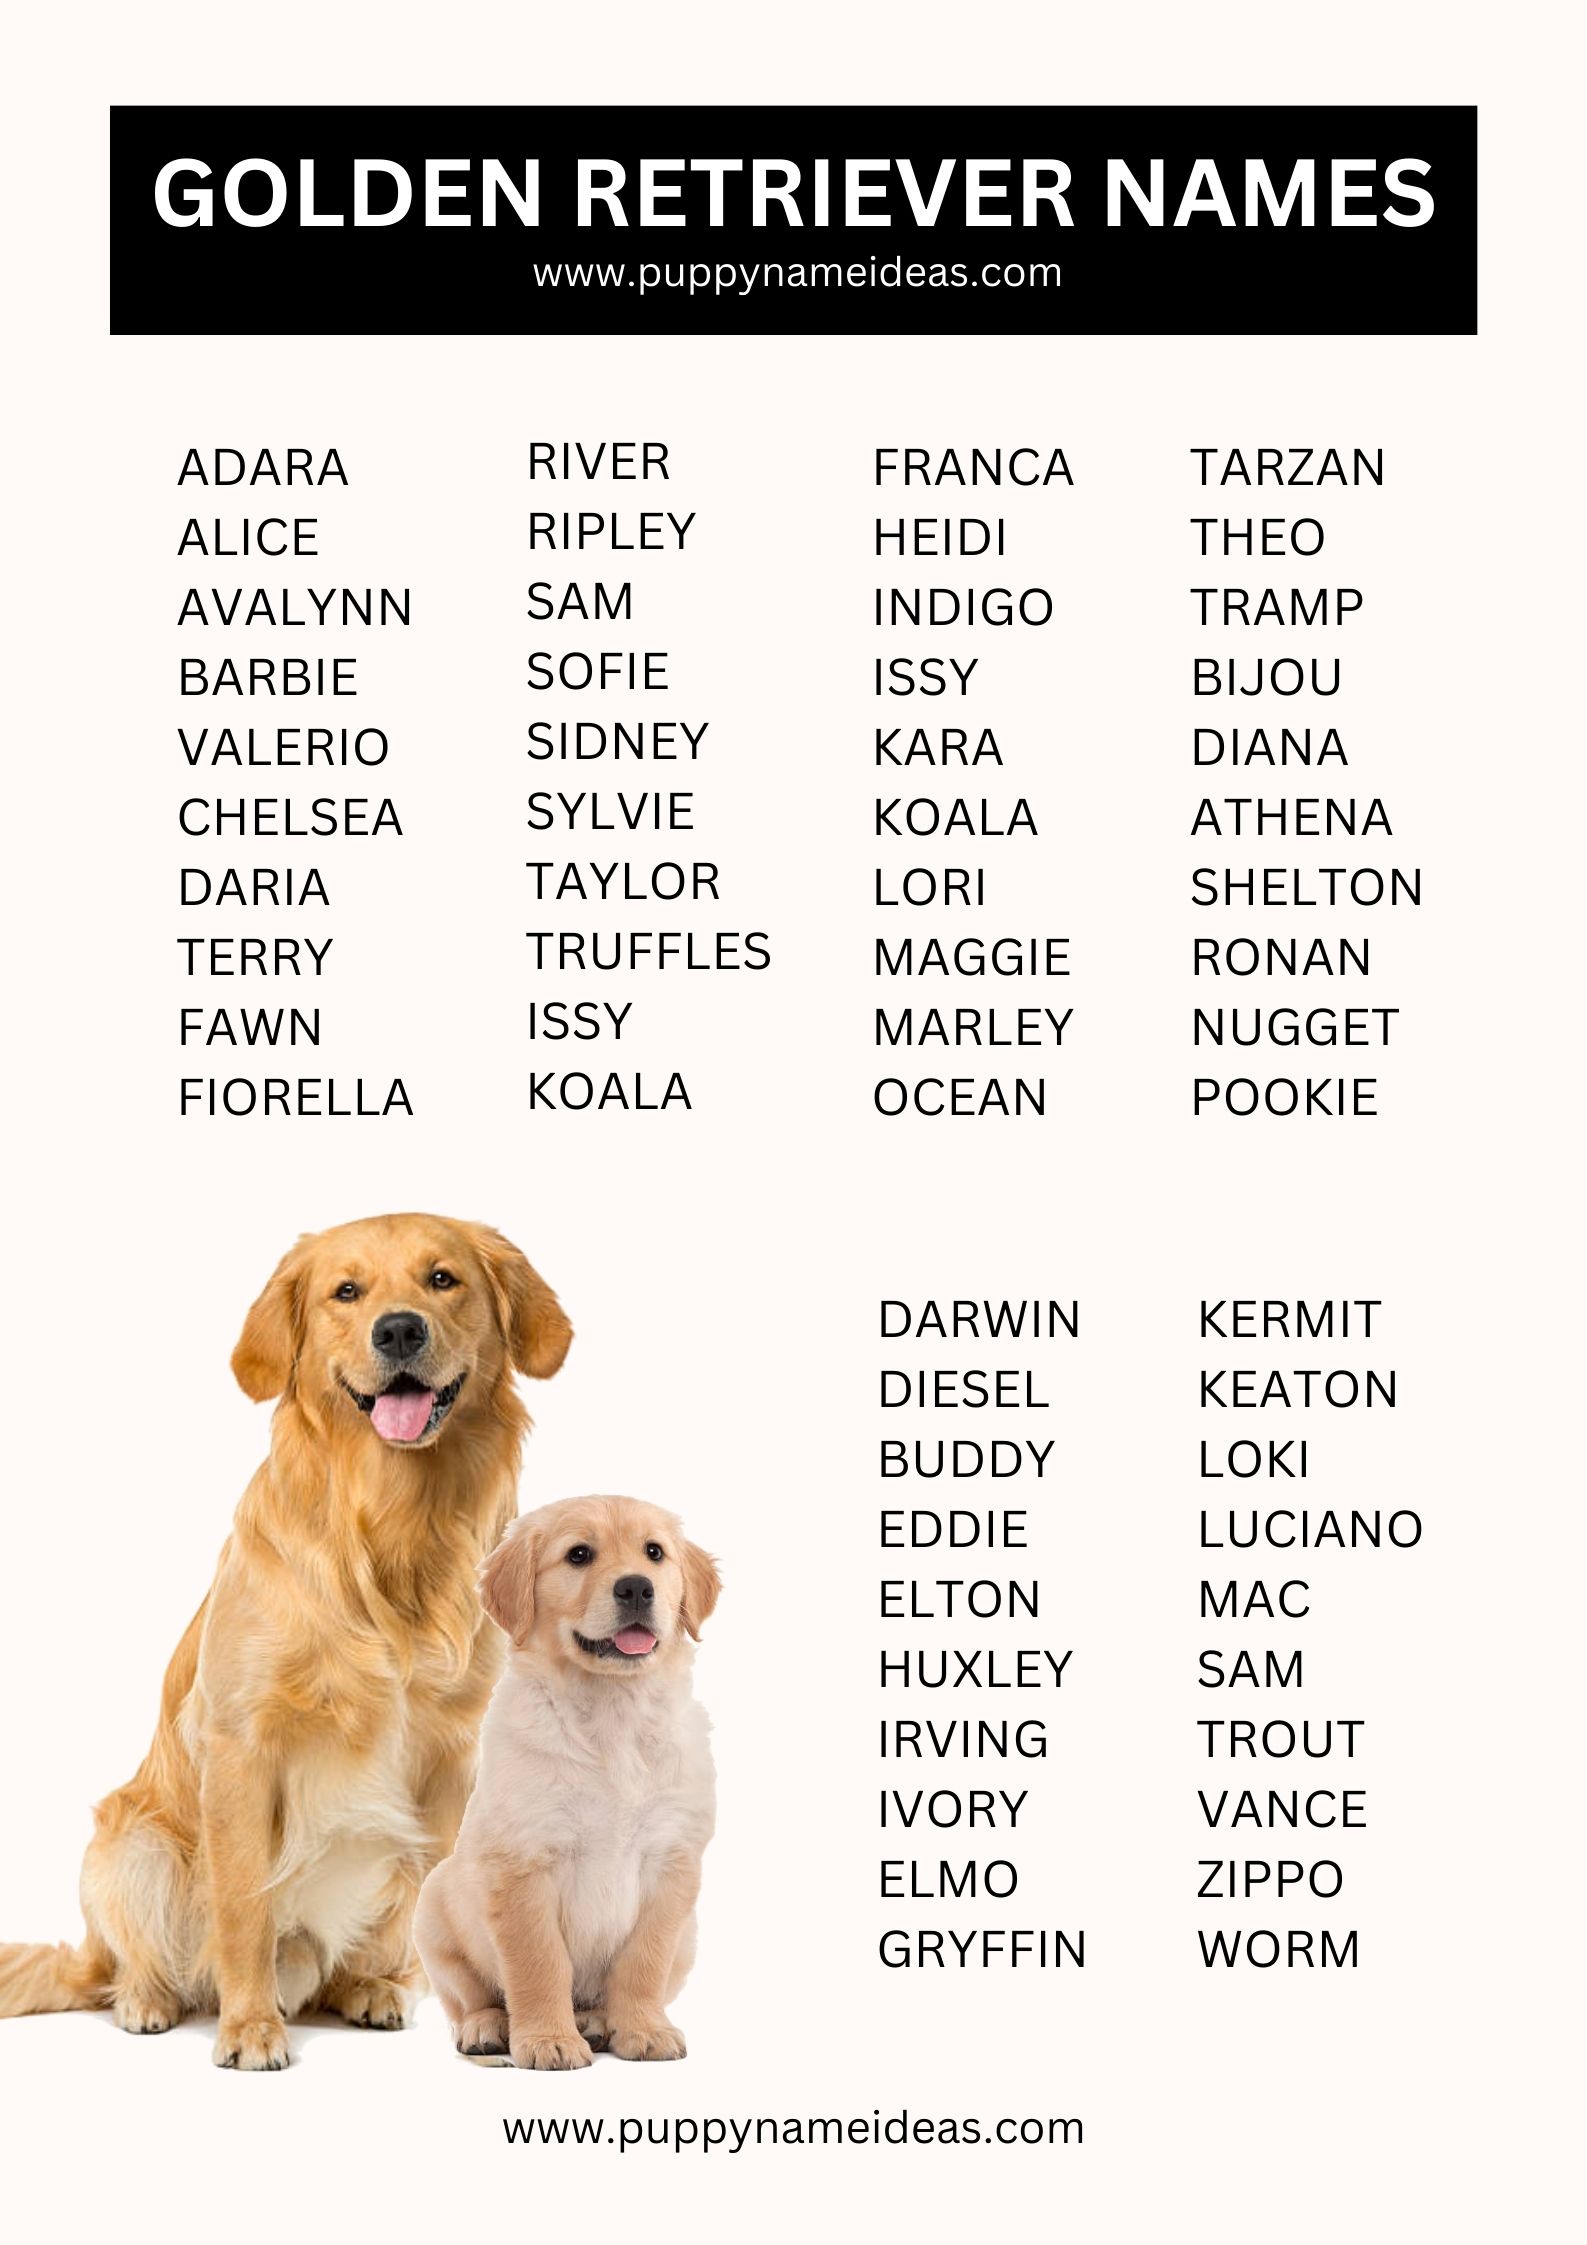 List Of Golden Retriever Names